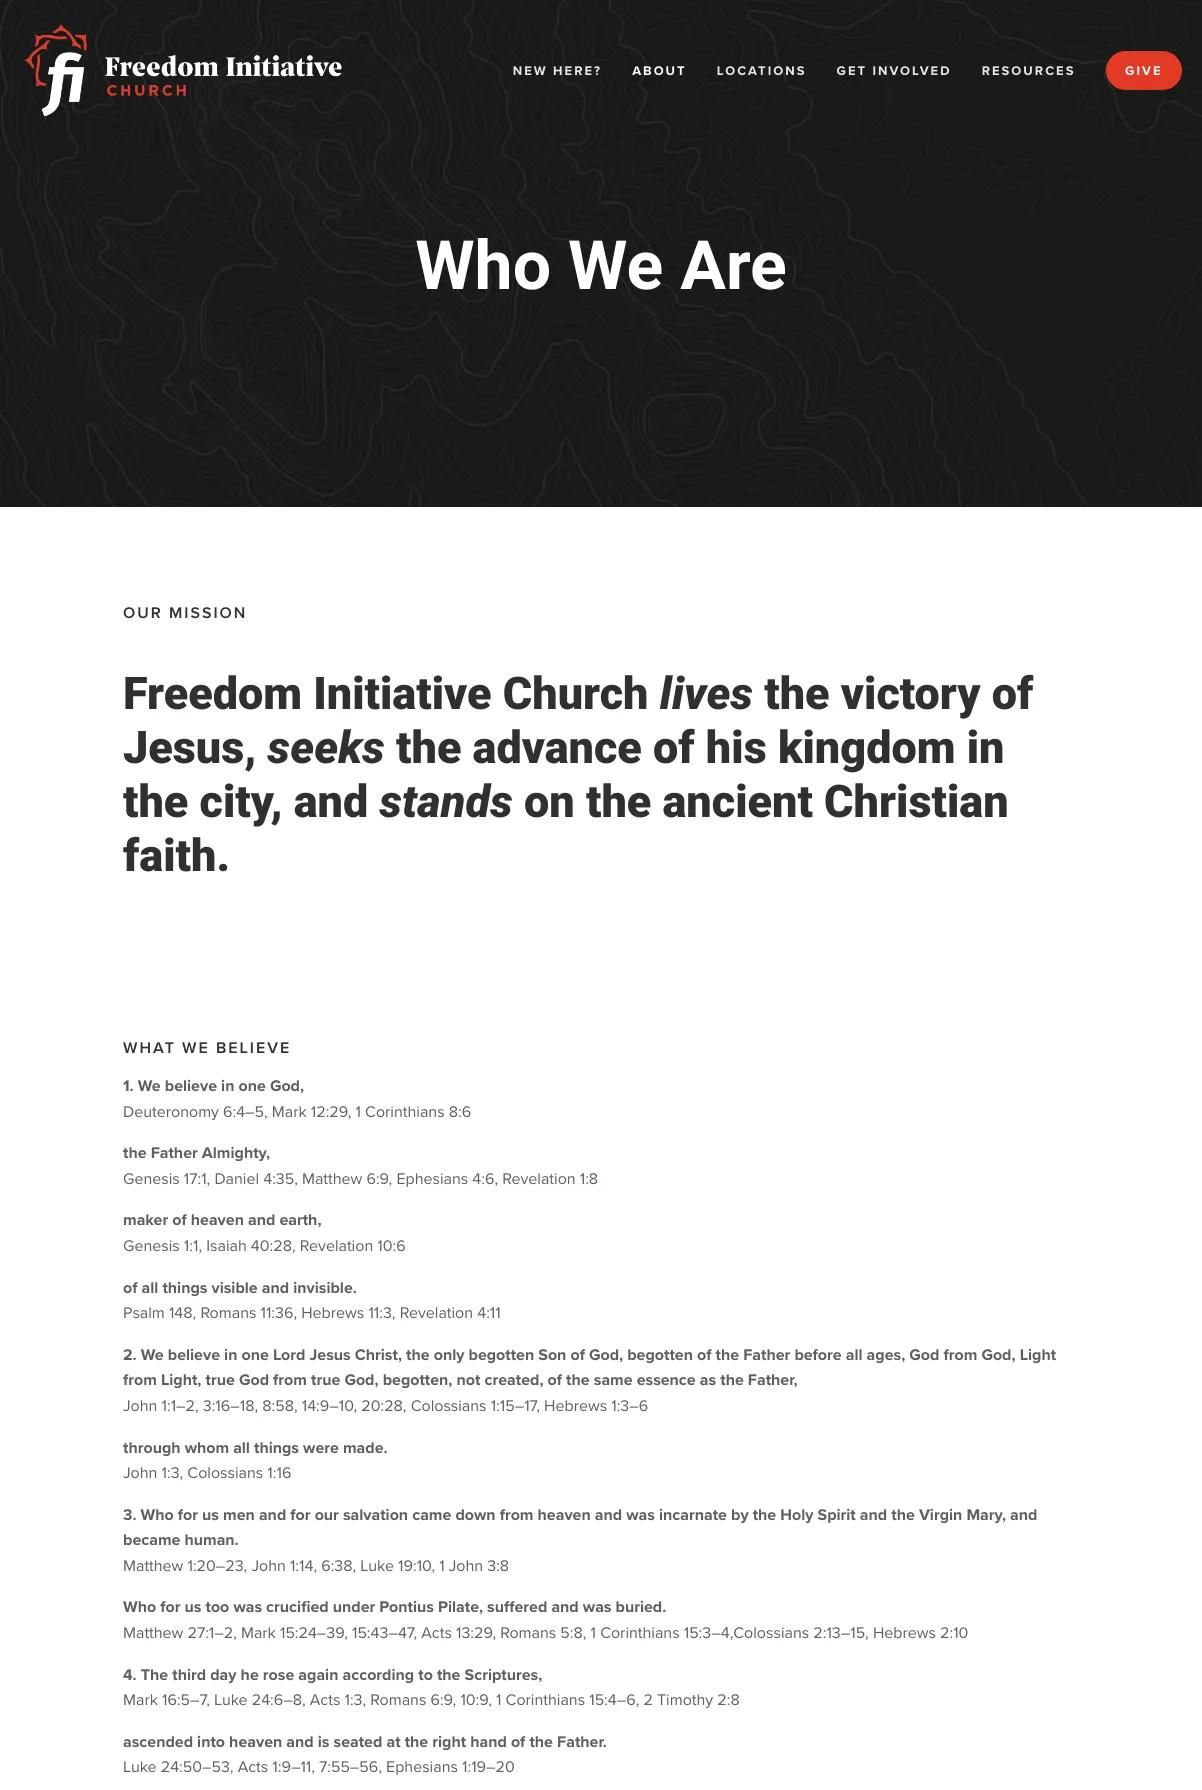 Screenshot 3 of Freedom Initiative Church (Example Squarespace Church Website)